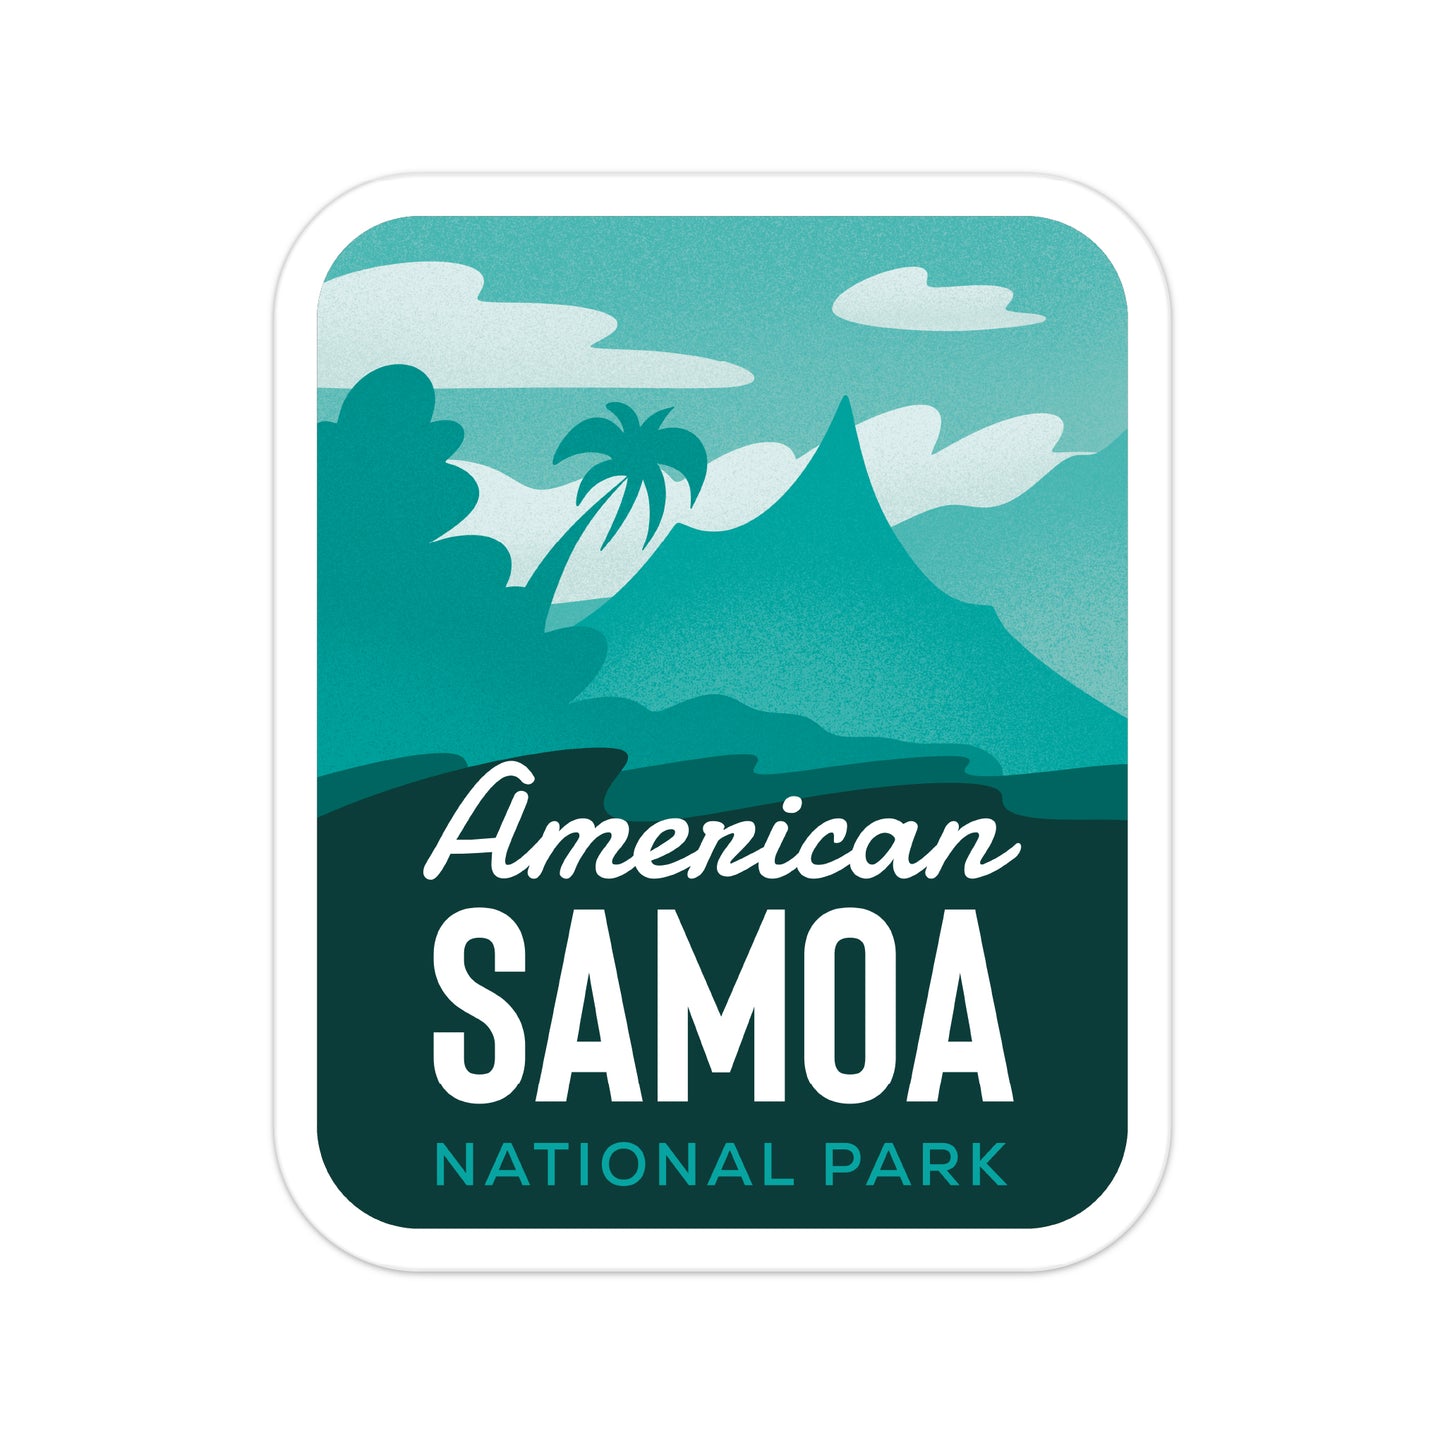 A sticker of American Samoa National Park